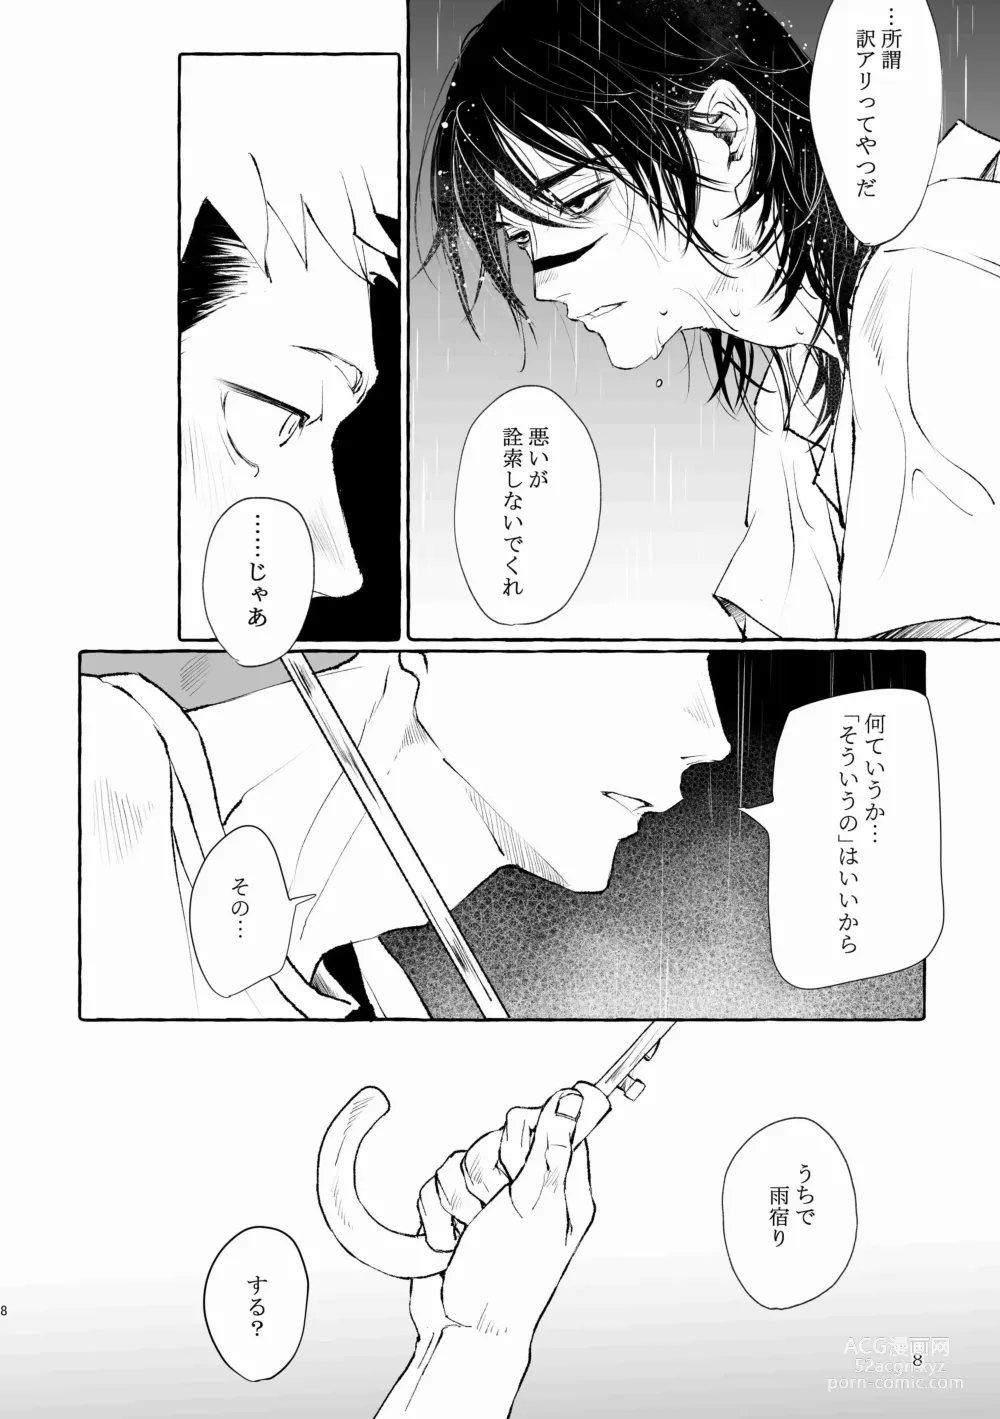 Page 8 of doujinshi Inryoku no Petrichor